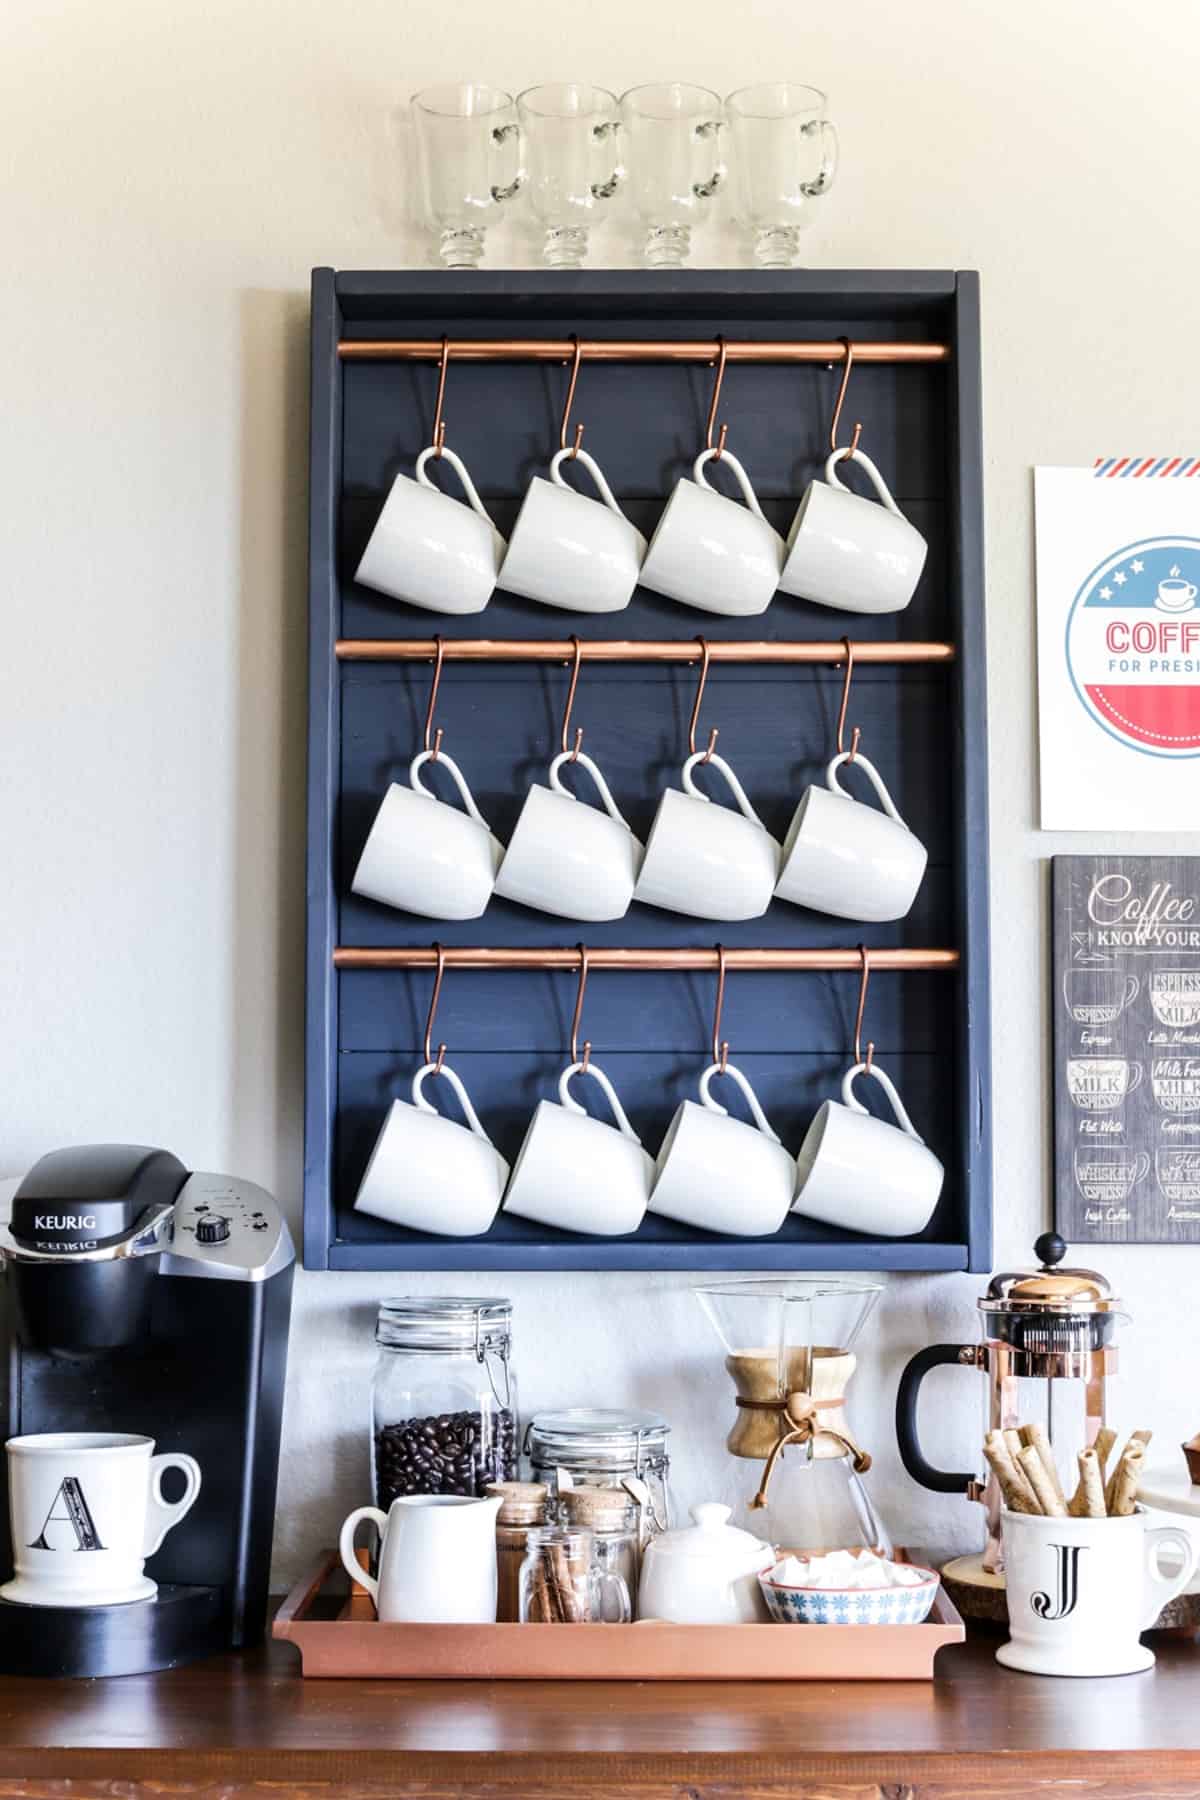 Coffee Station with “Hook Shelf”